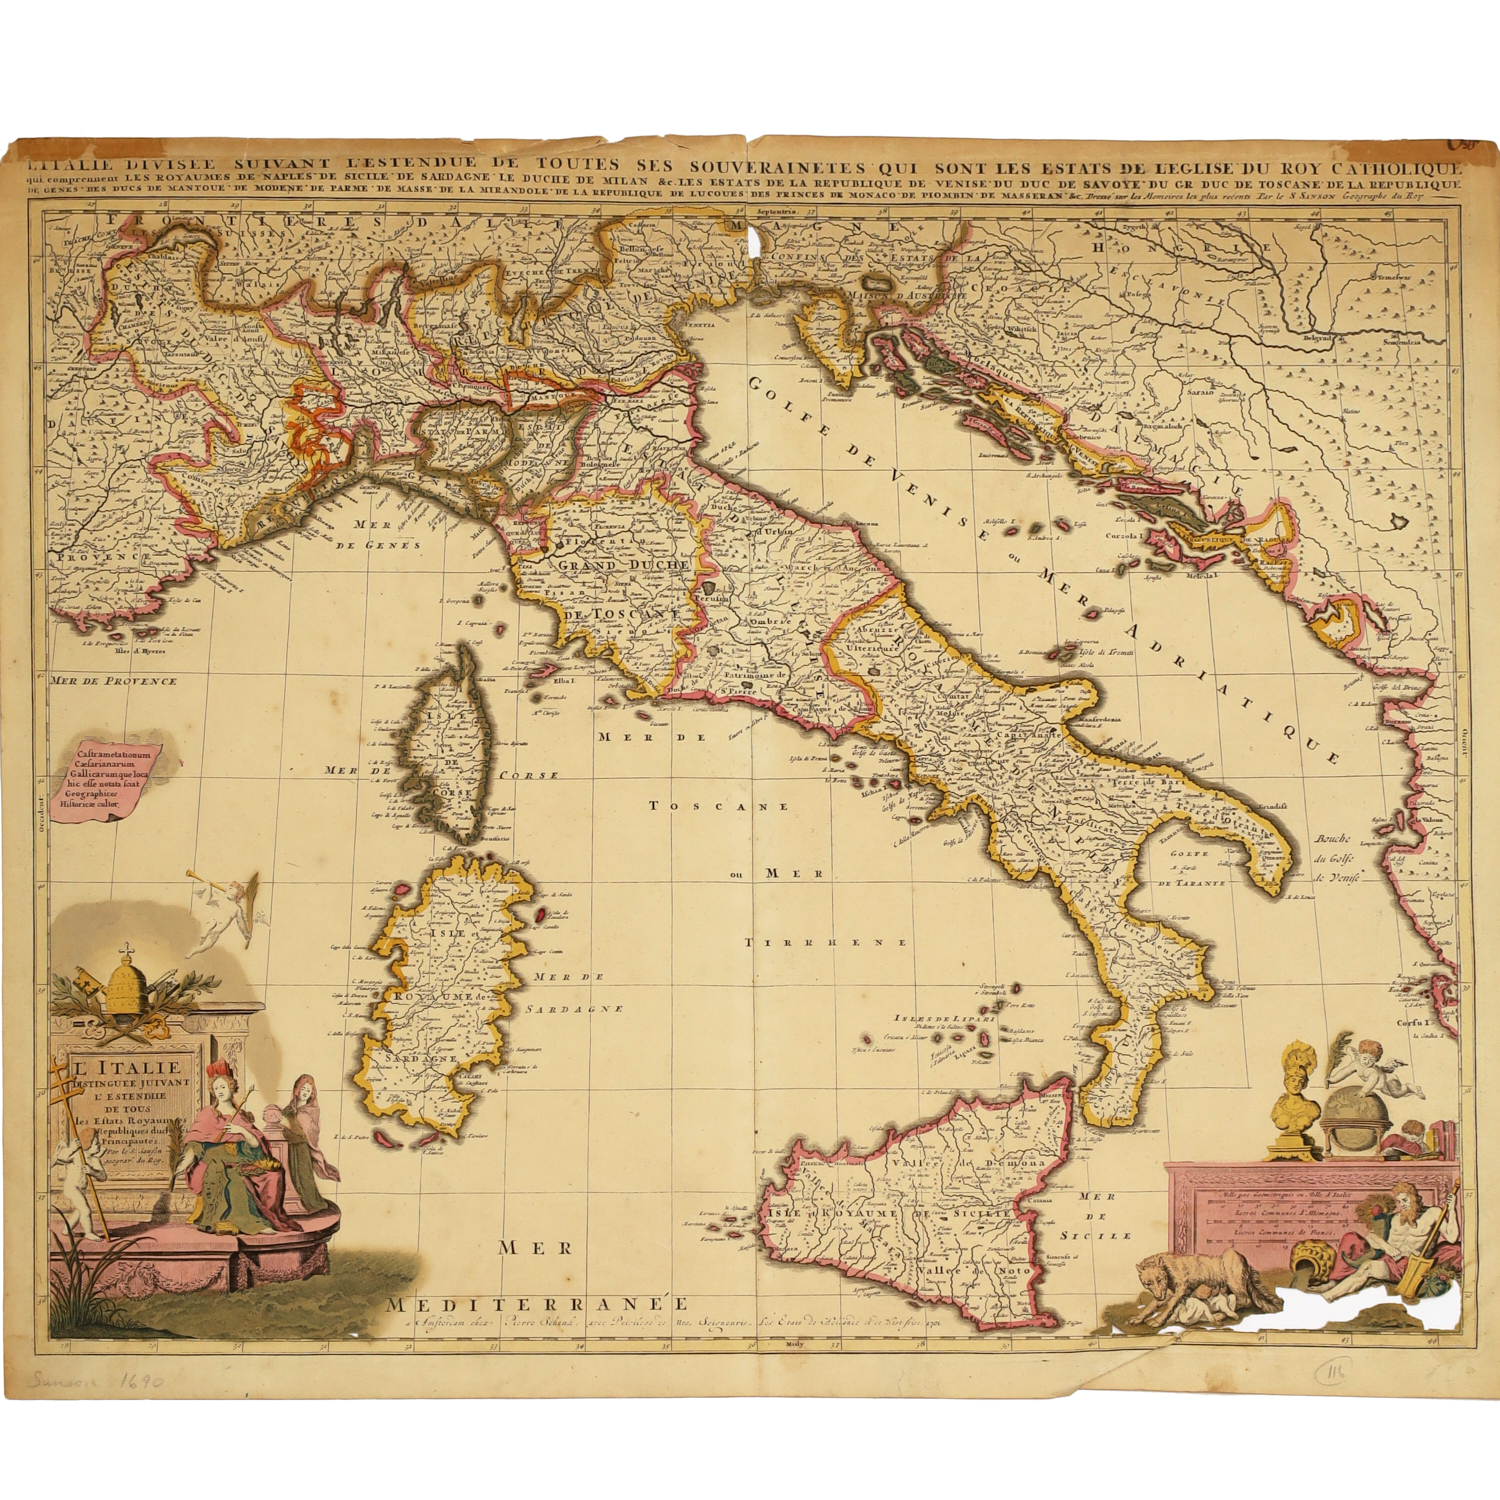 NICOLAS SANSOM MAP OF ITALY 1701 3619a3